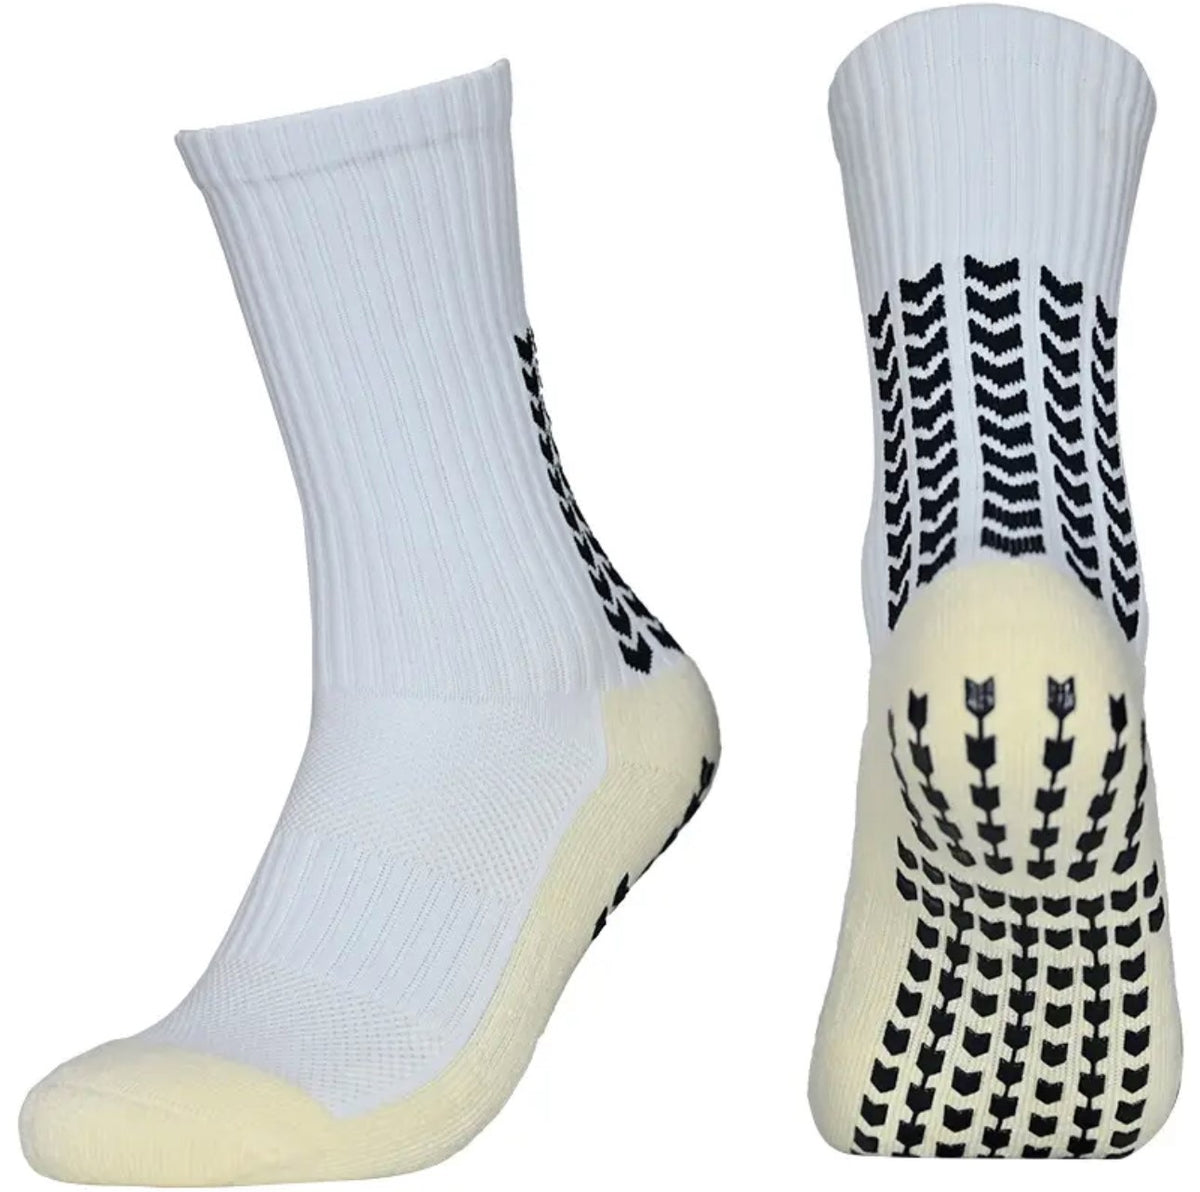 The Grip Sock Grip Socks, Leg Sleeves and Shin Guard Straps Bundle Set